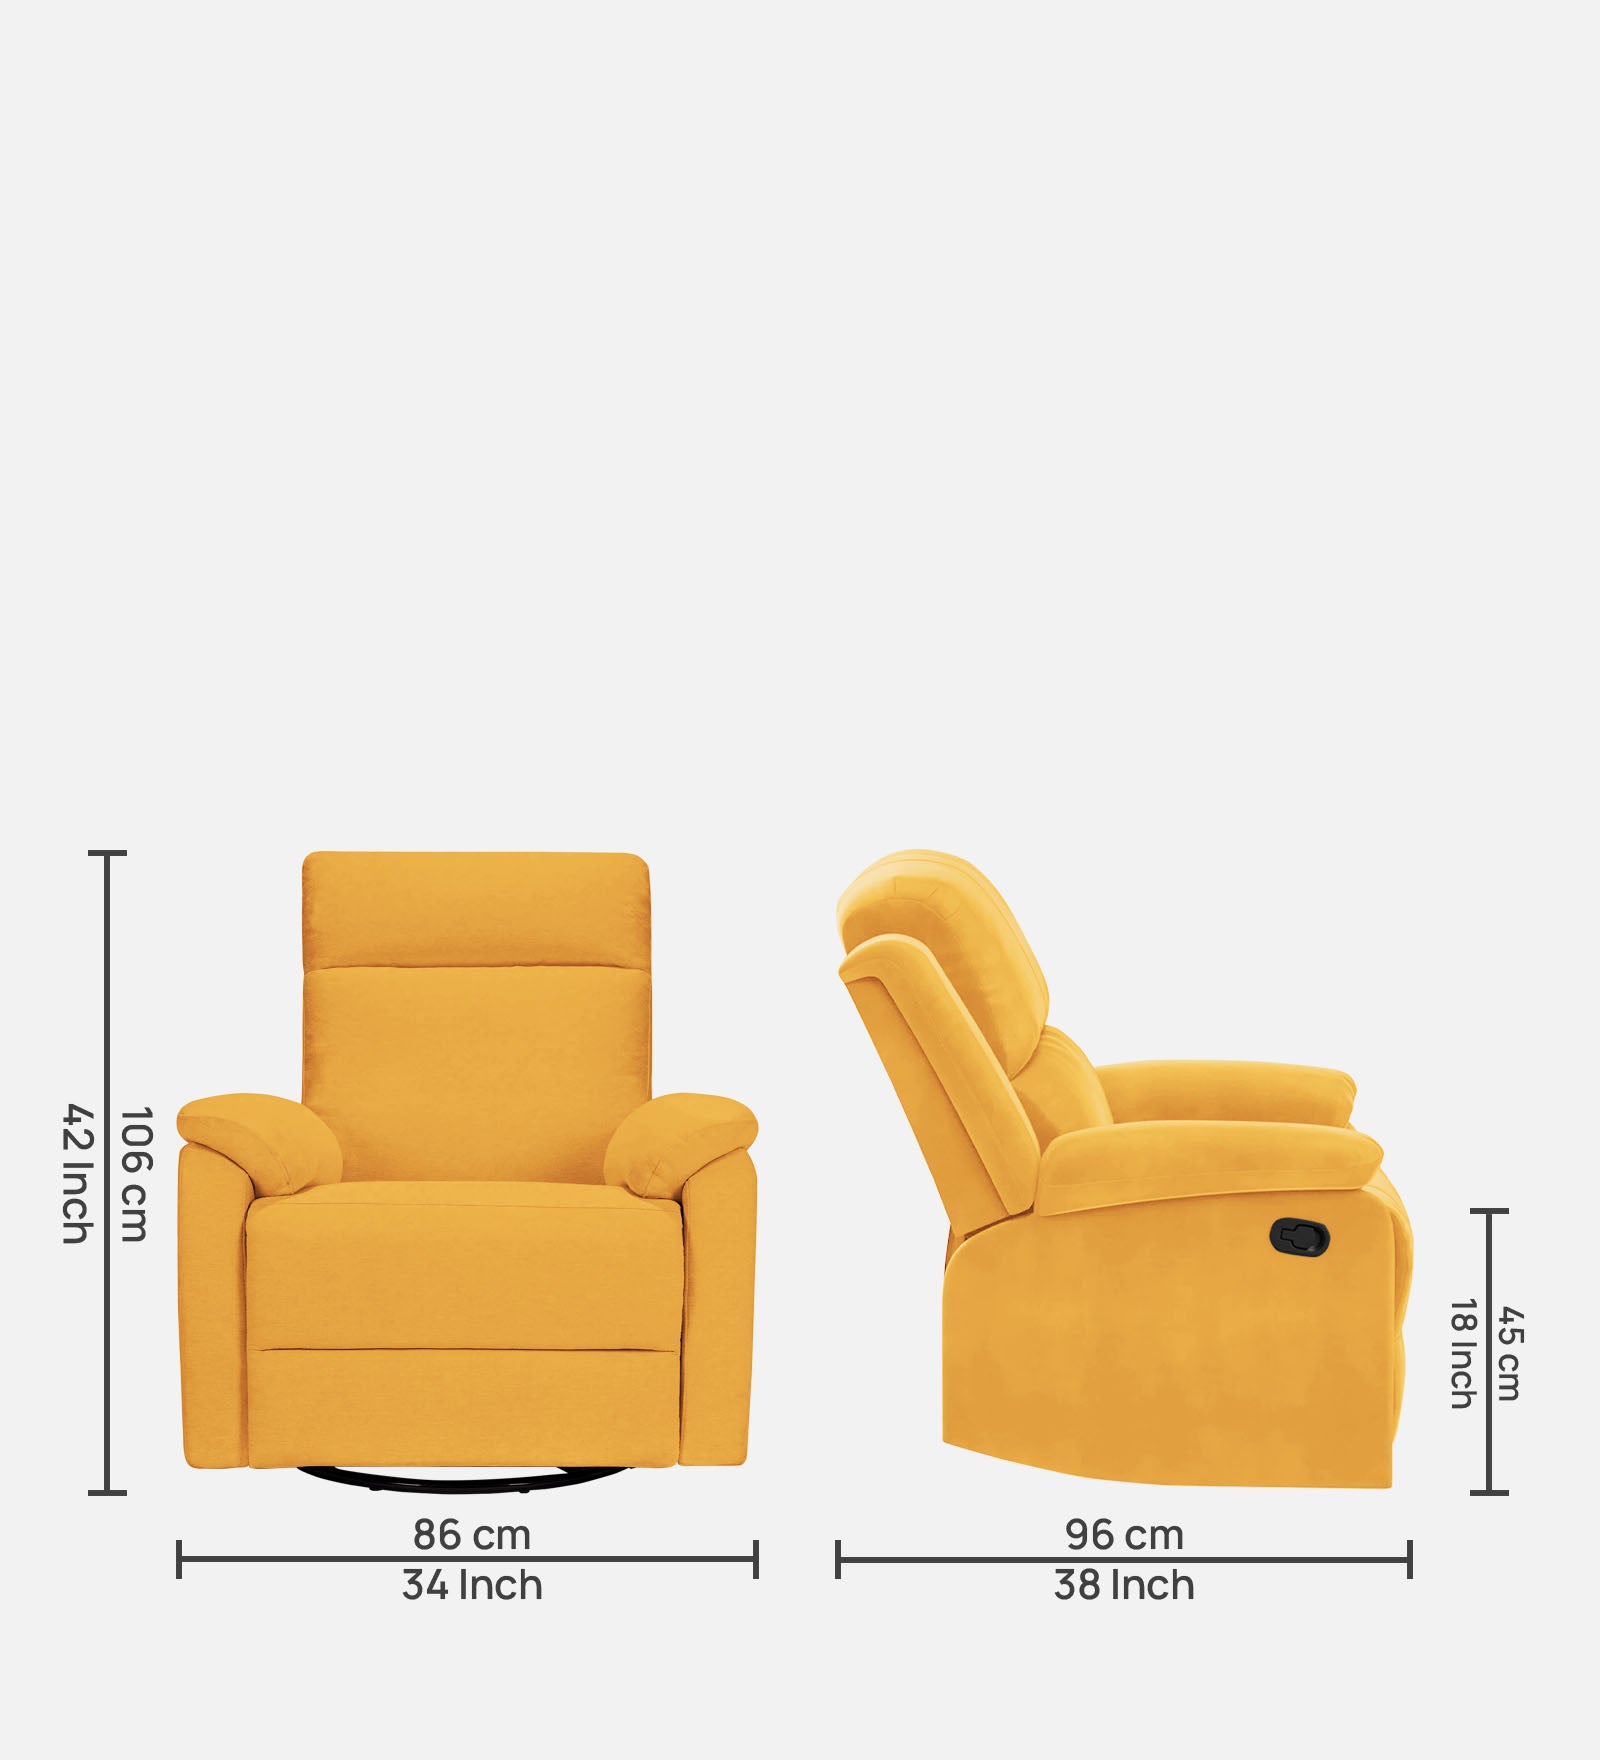 Mandy Fabric Manual 1 Seater Recliner In Turmeric Yellow Colour